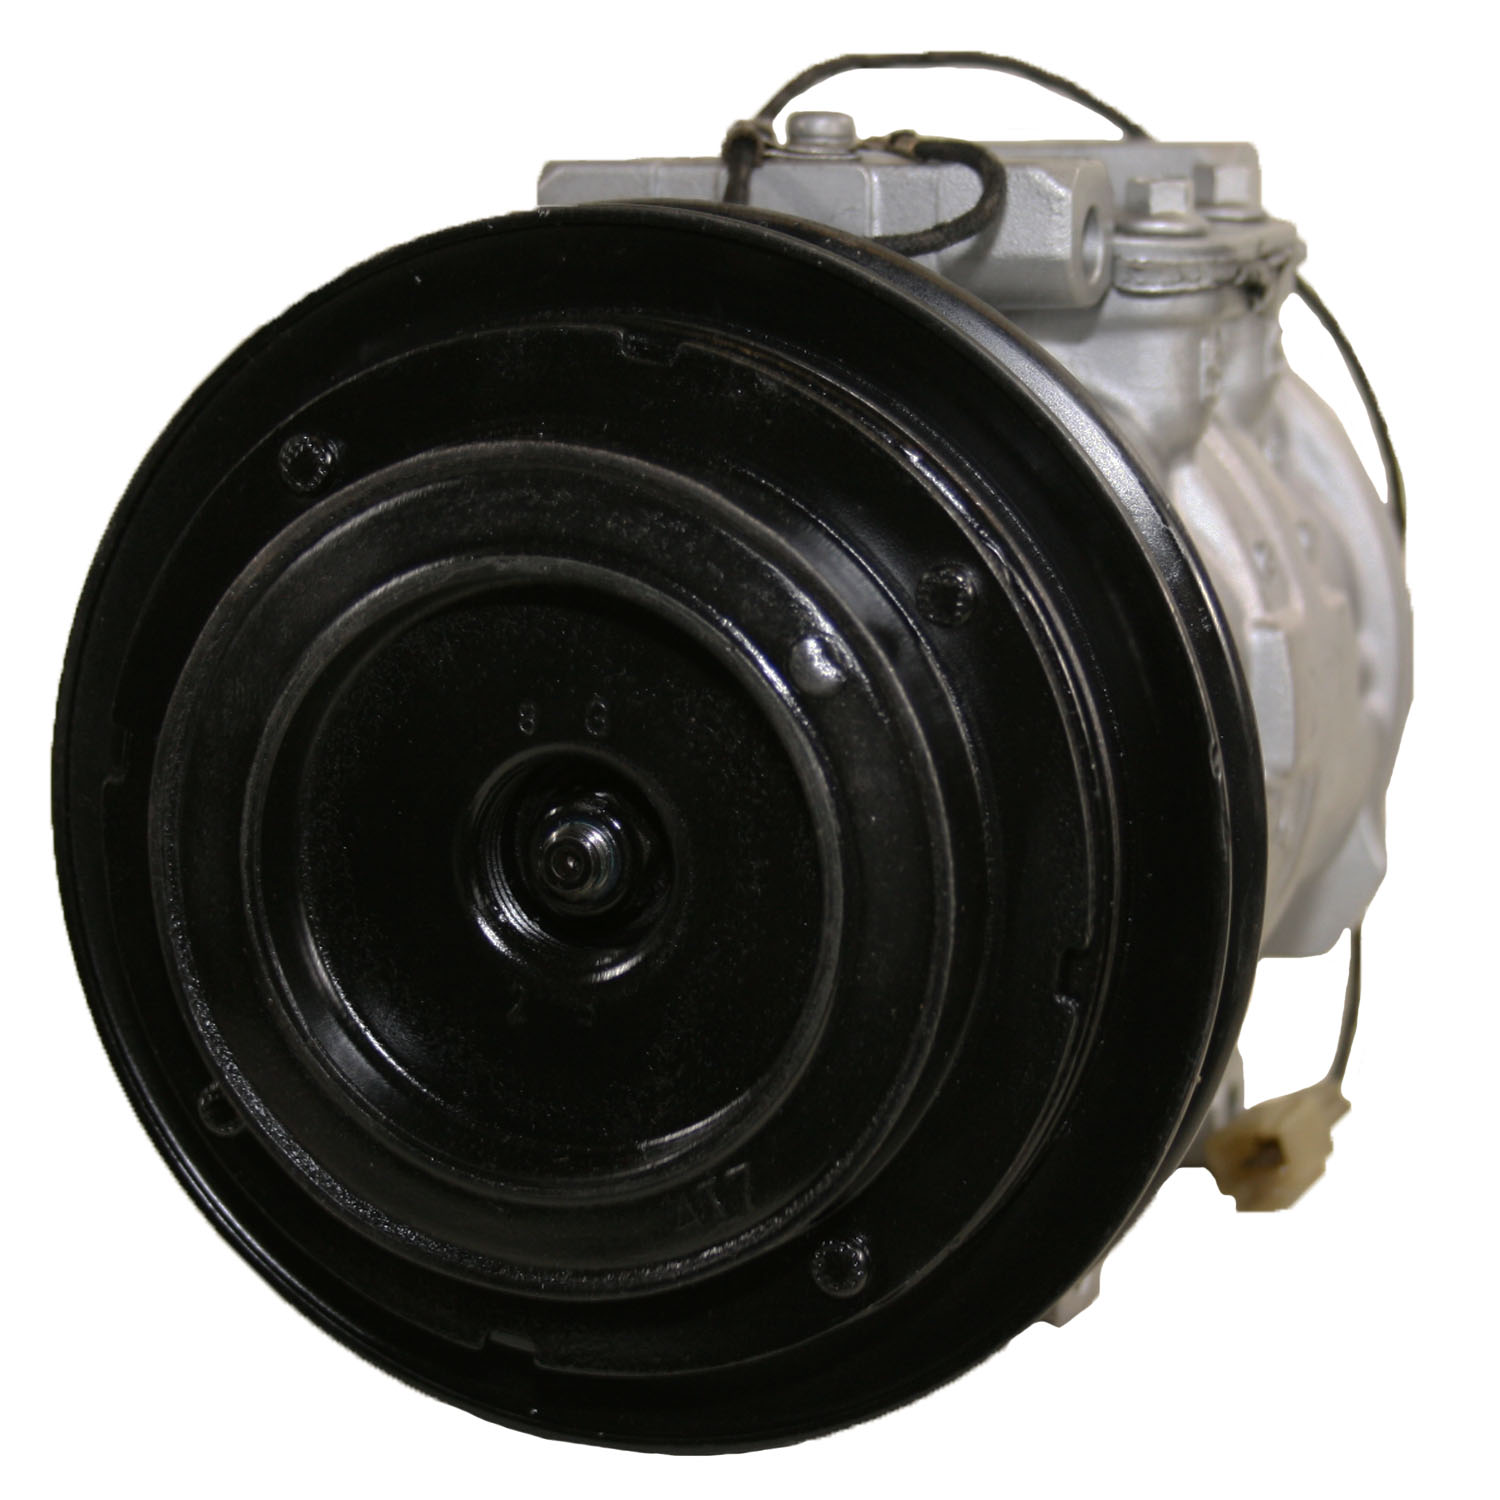 TCW Compressor 31030.102 Remanufactured Product Image field_60b6a13a6e67c